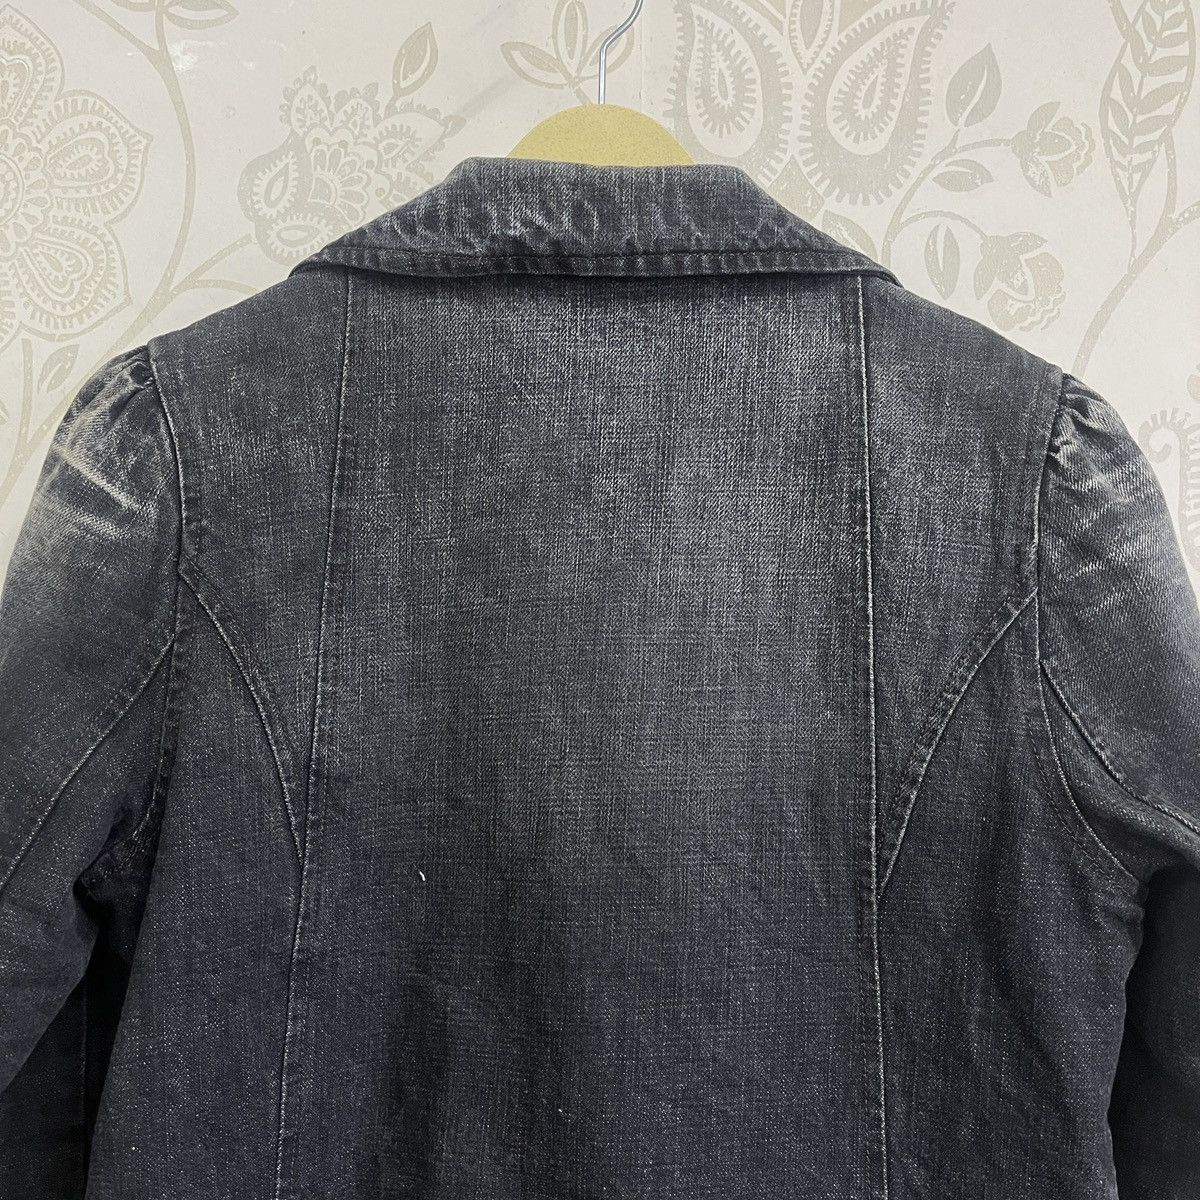 Black Vintage Cerruti Jeans Quilted Italian Jacket - 25